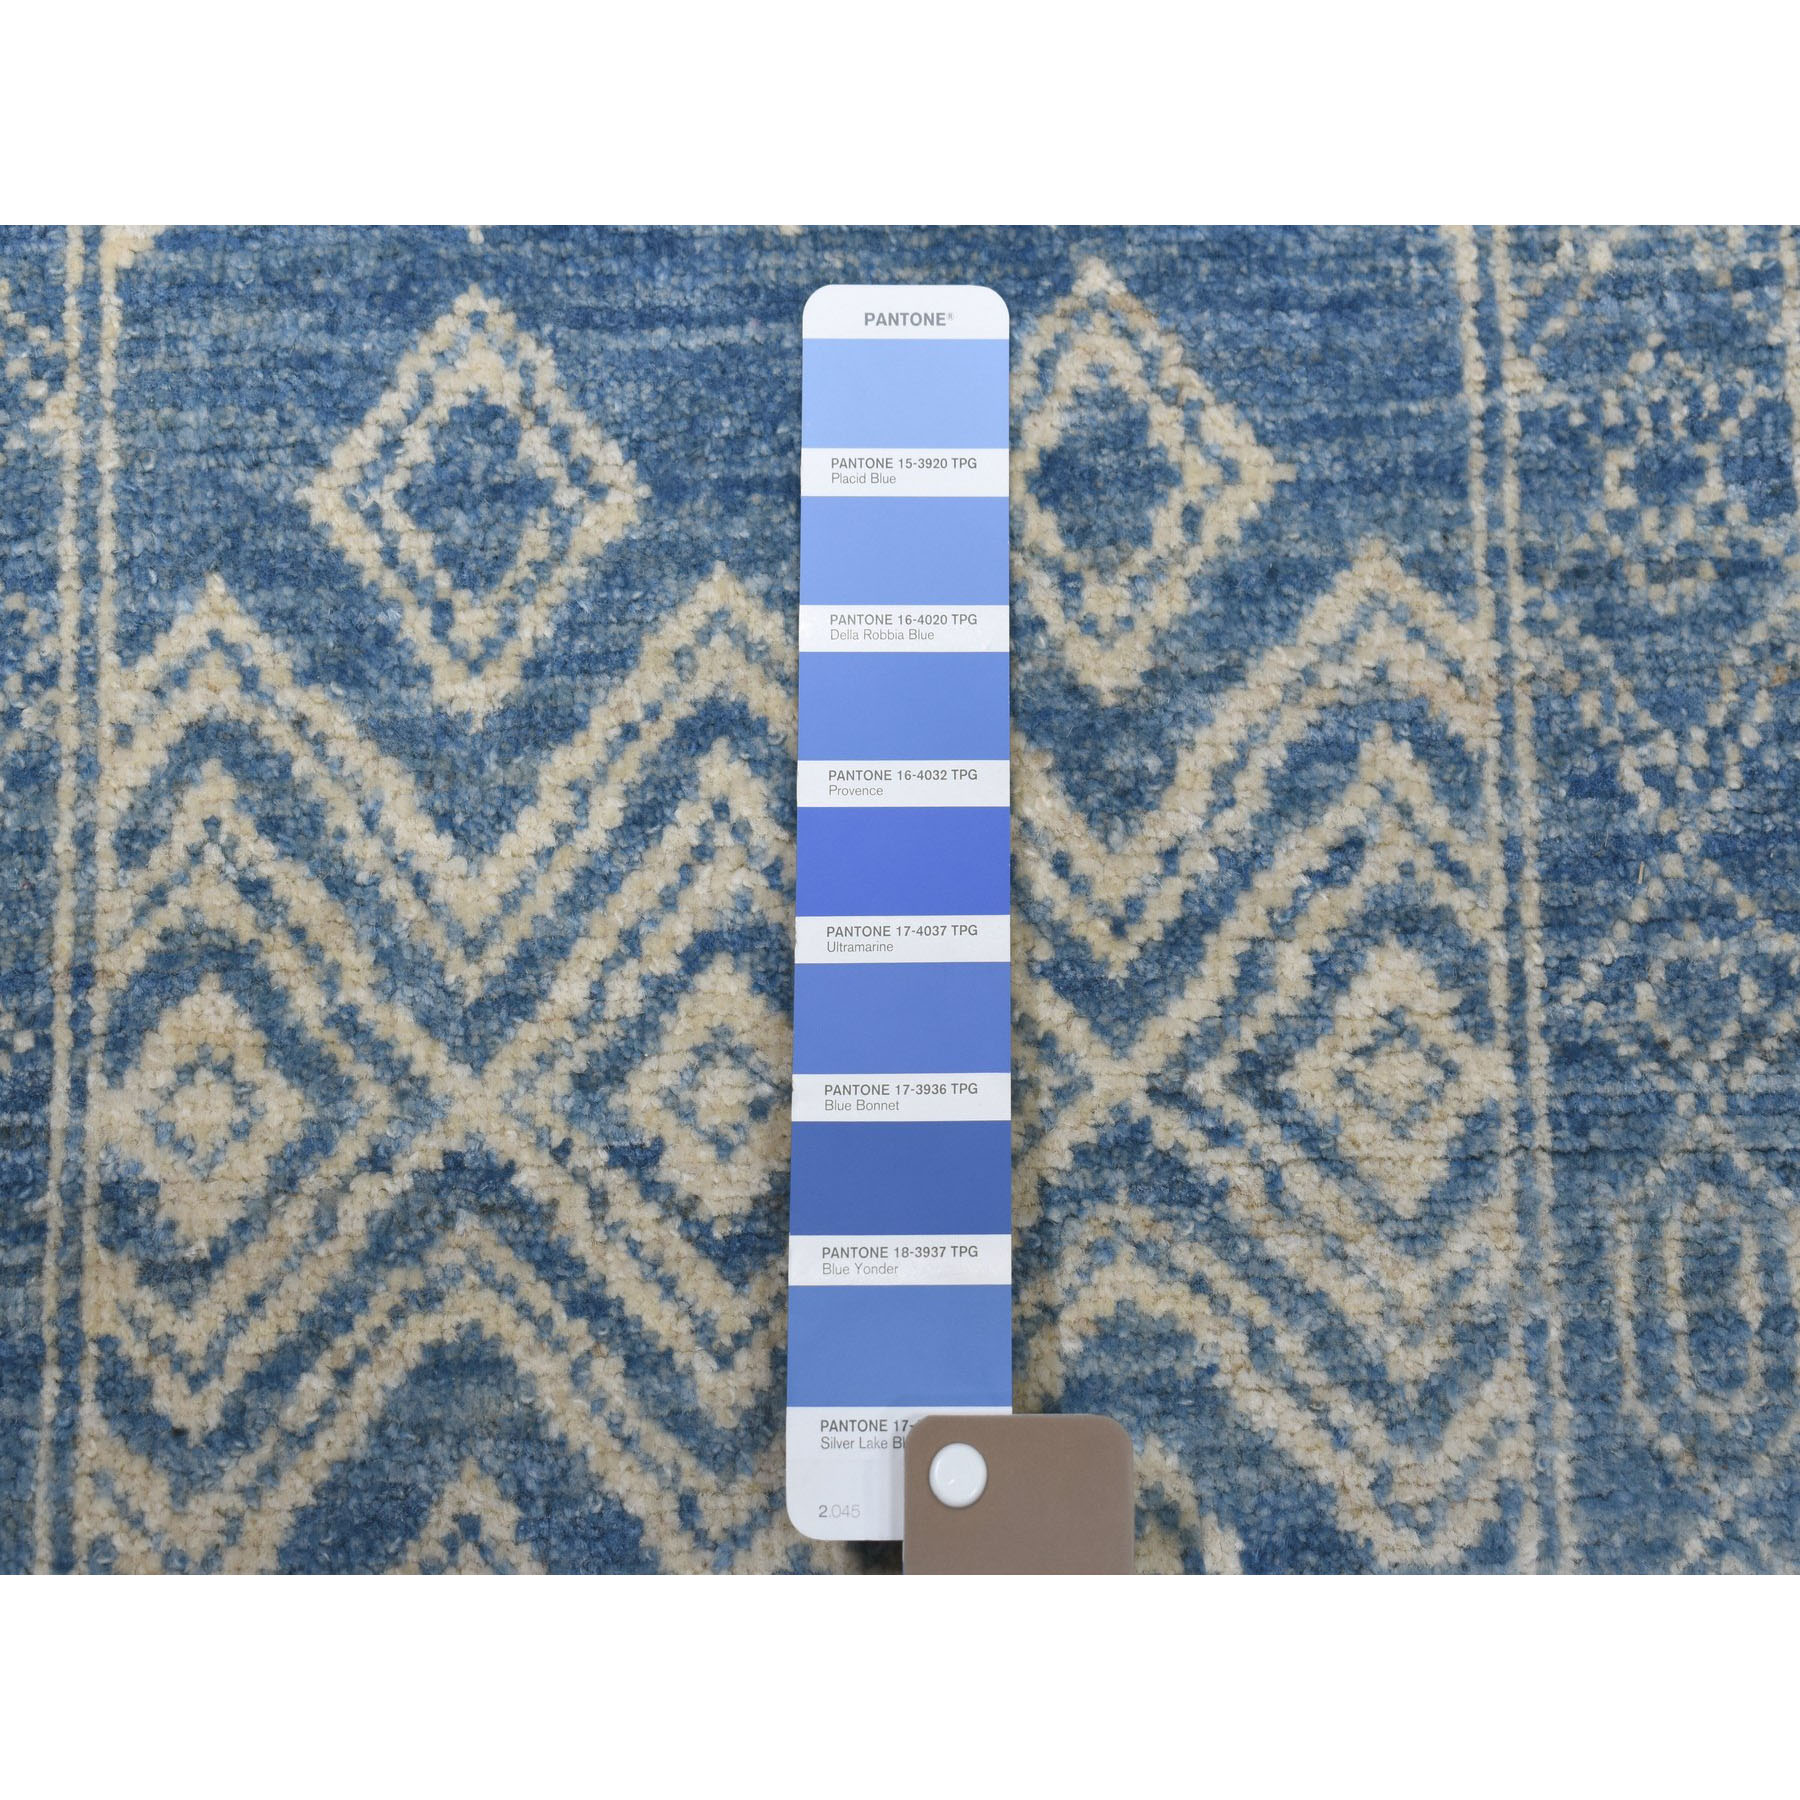 8-9 x11-10  Pure Wool Southwestern Peshawar Berber Motif Influence Design Hand-Knotted Oriental Rug 